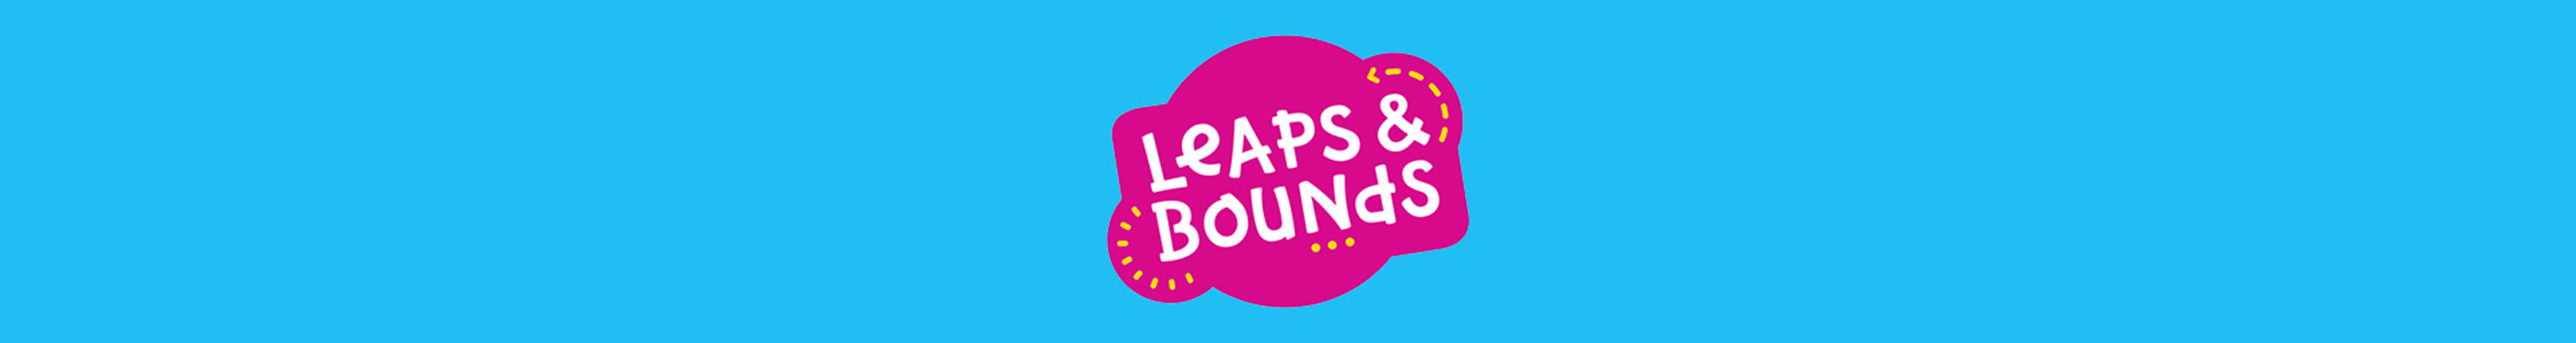 Leaps & Bounds Ponder & Puzzle Level 1 Dog Puzzle Toy, Medium